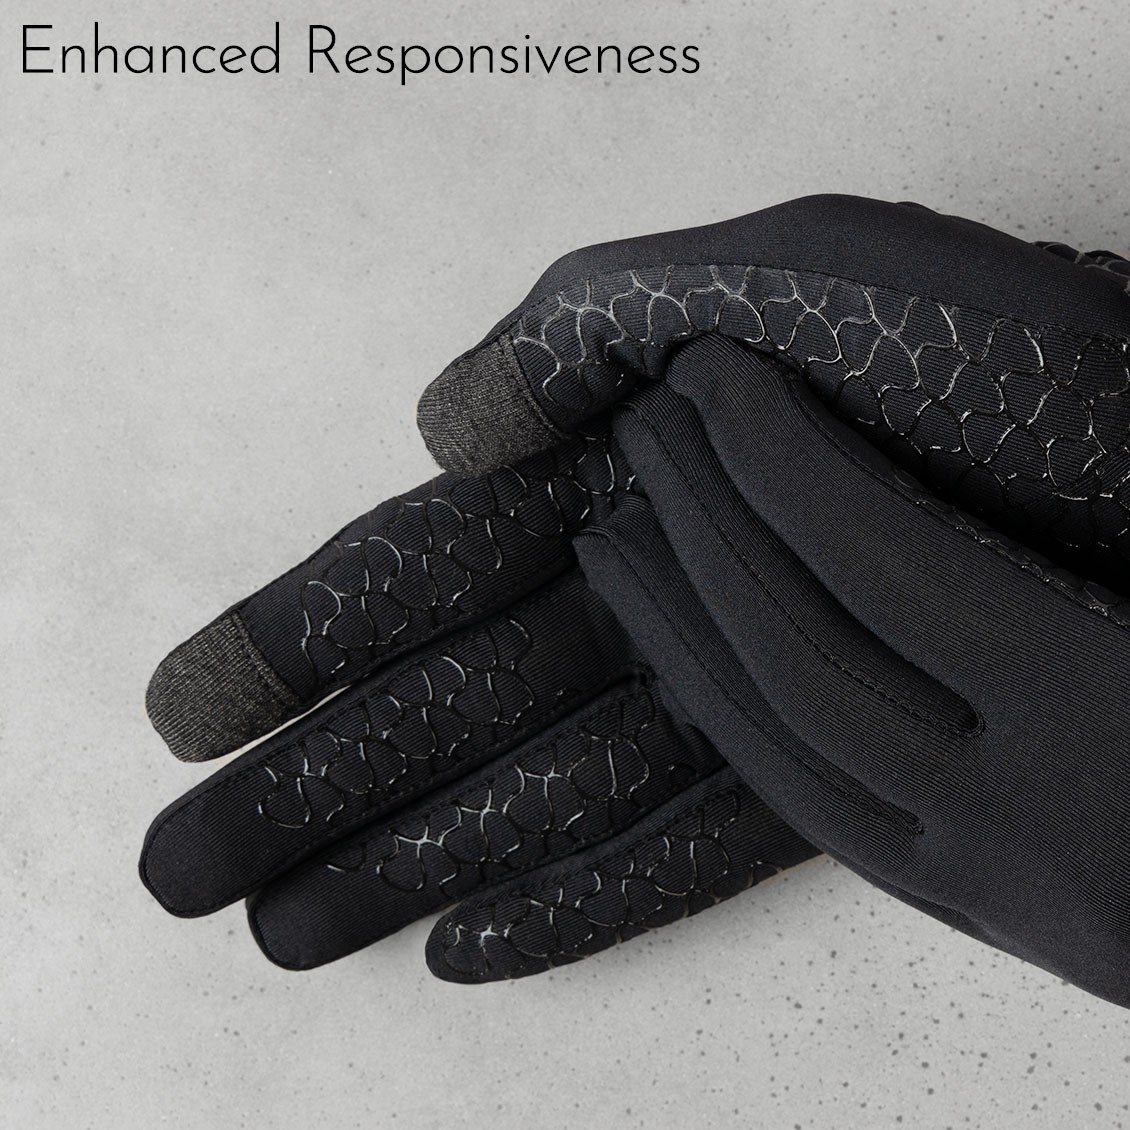 Sunnah Style Esteem Signature Gloves v2 Wrist Length Enhanced Responsiveness